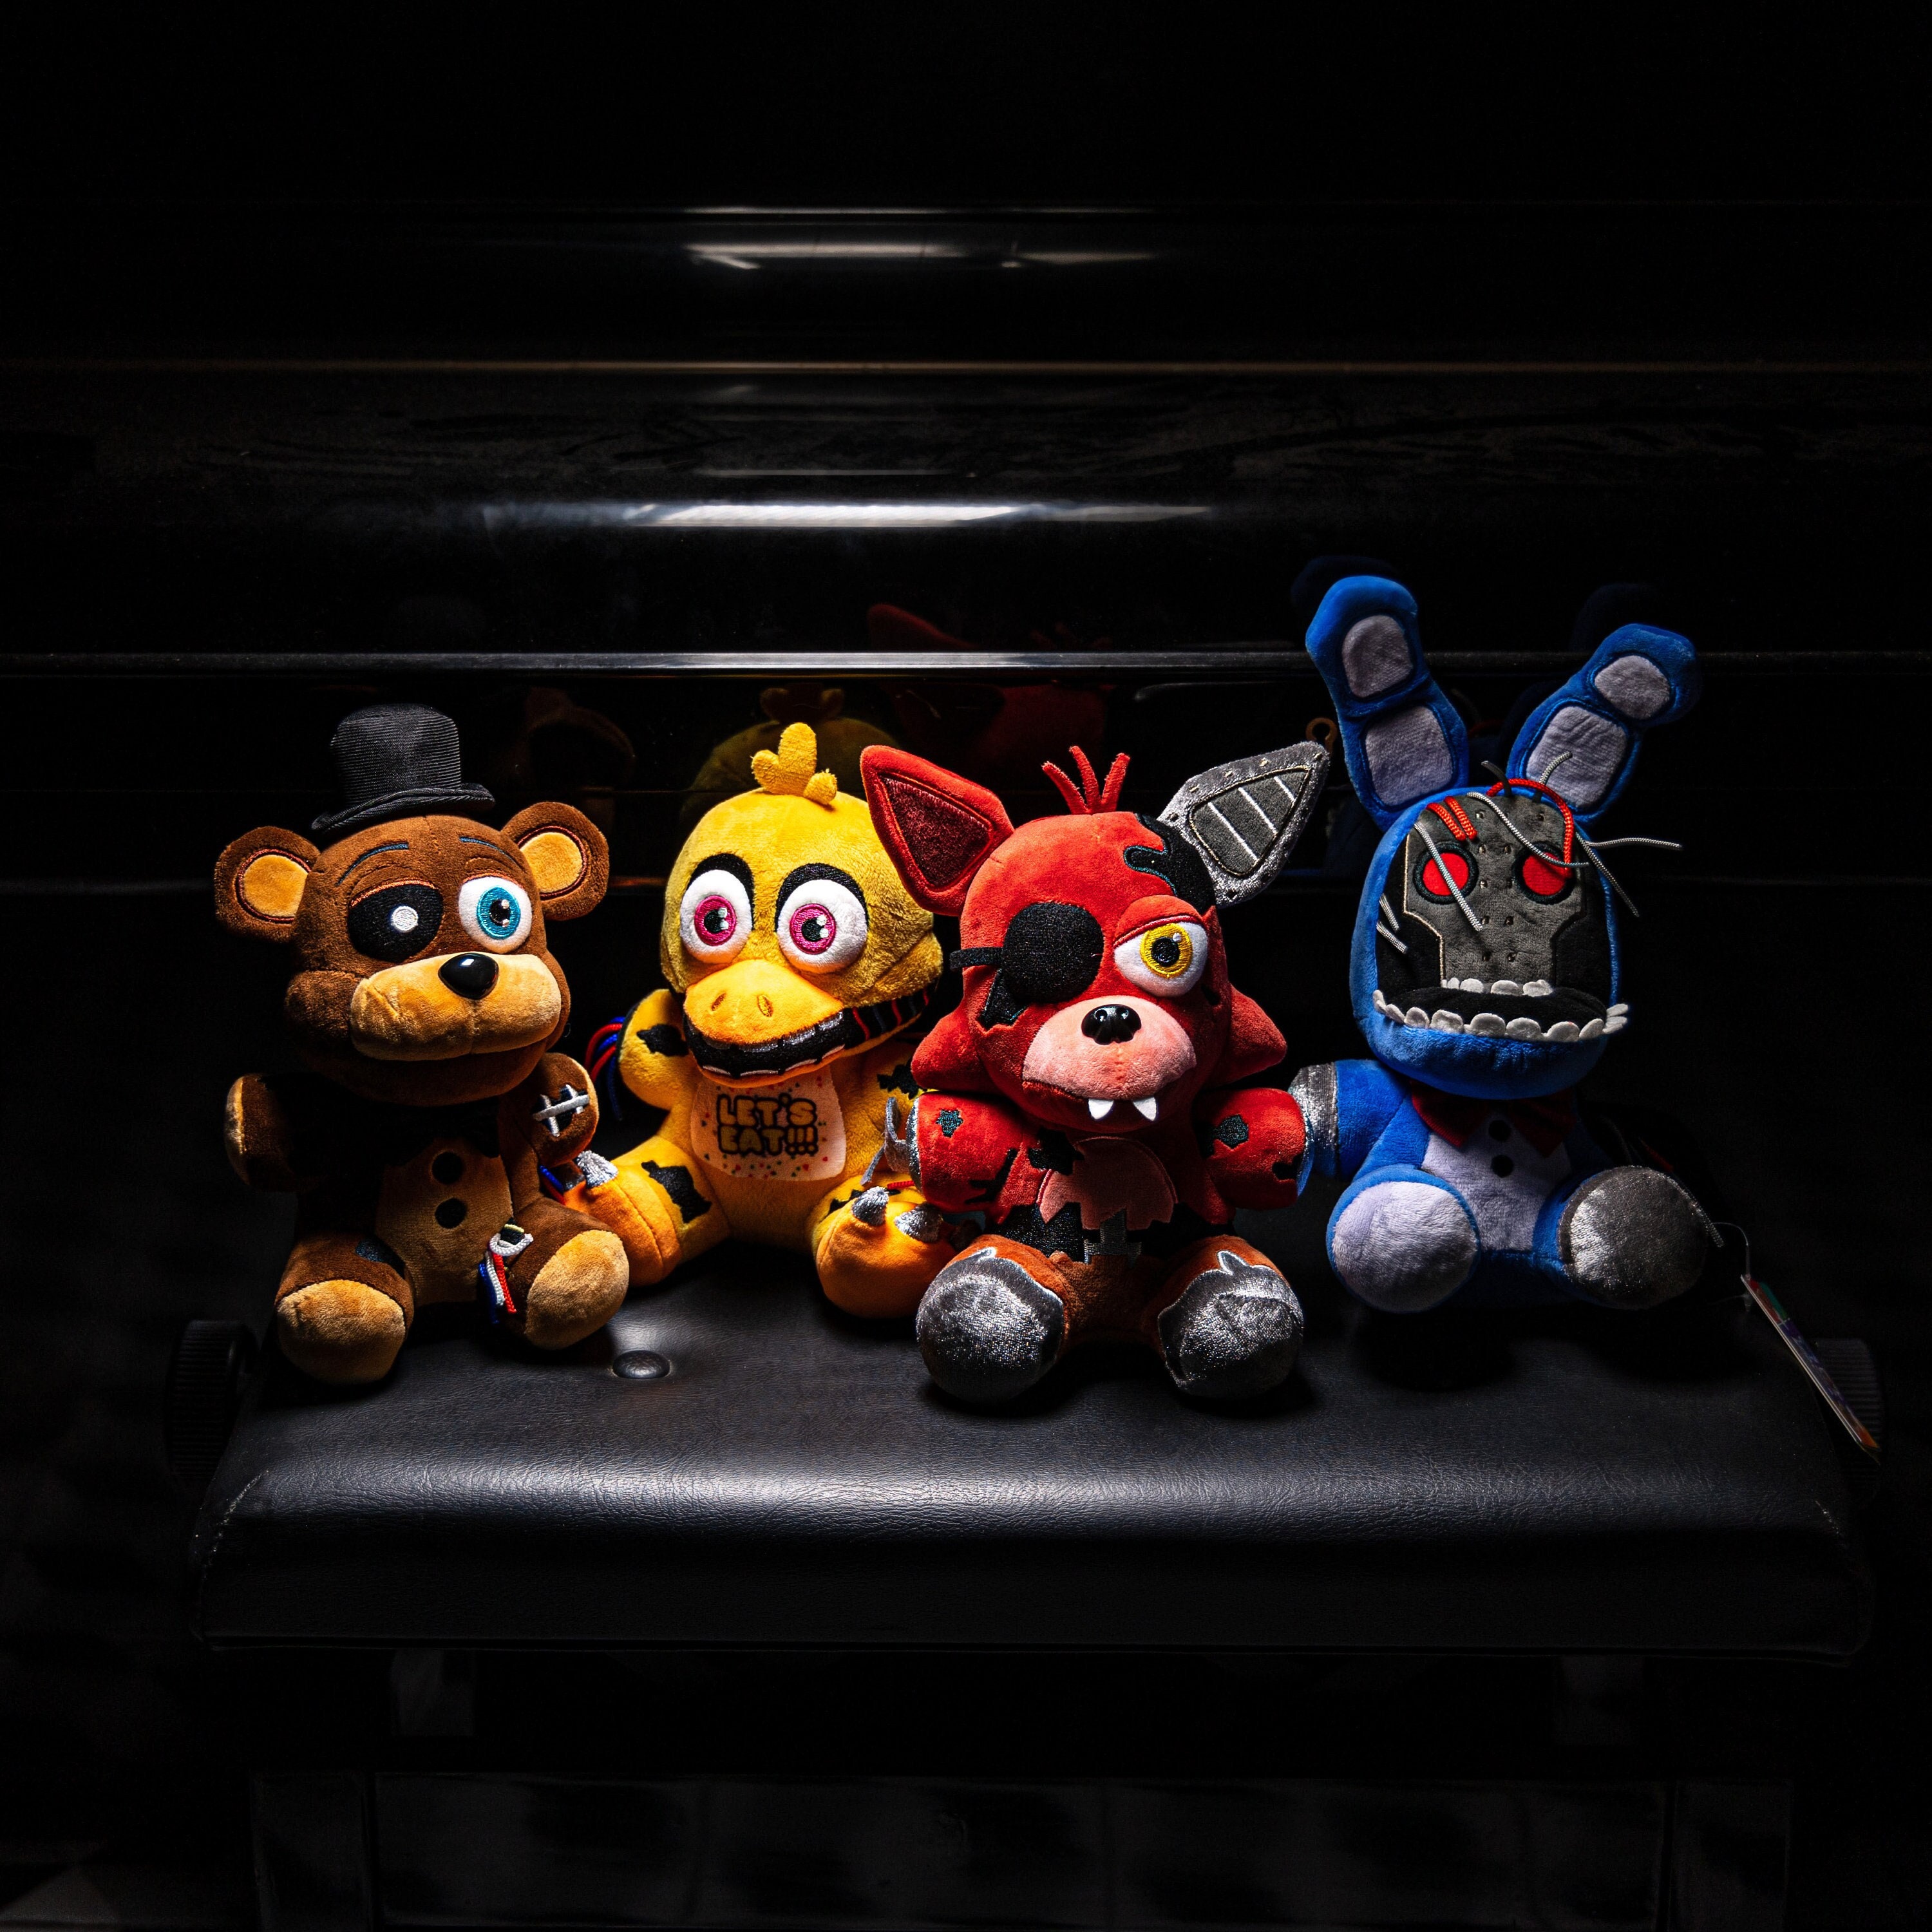 Ready Stock FNAF Five Nights At Freddy's Plush Toy Stuffed Animal Chica  Bonny Foxy Fans Gift zfDn